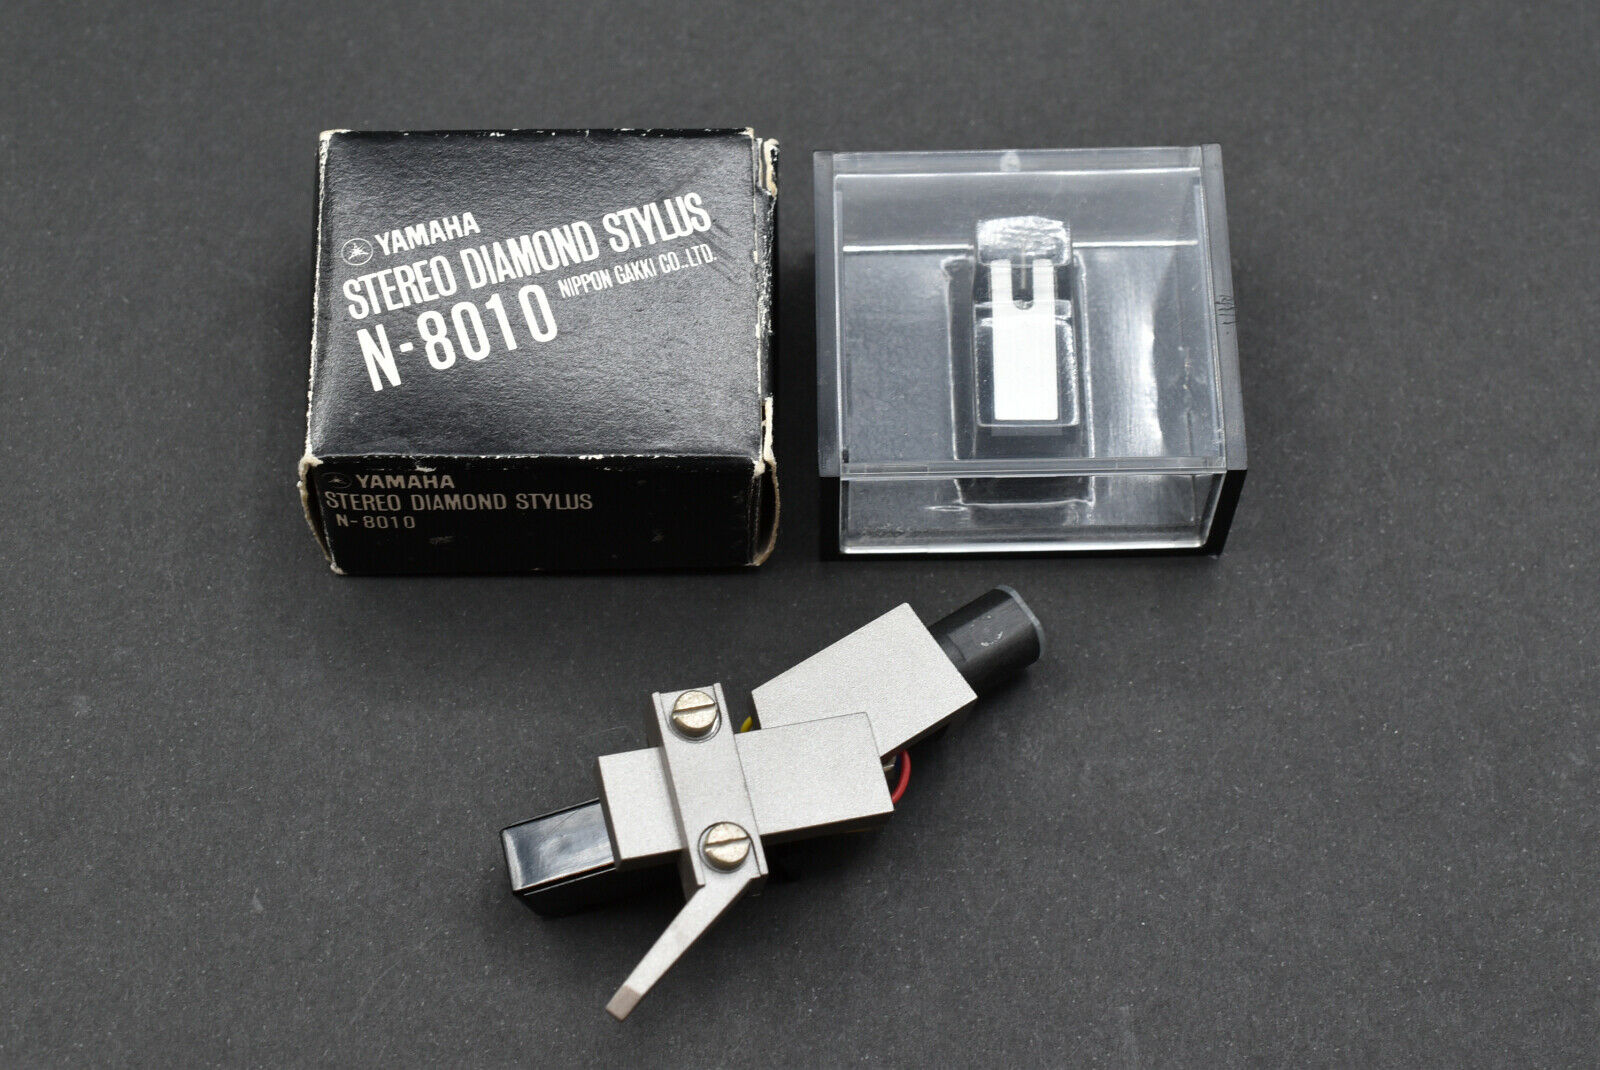 Yamaha MC-801 MC Cartridge with MIB! YAMAHA N-8010 Original Stylus